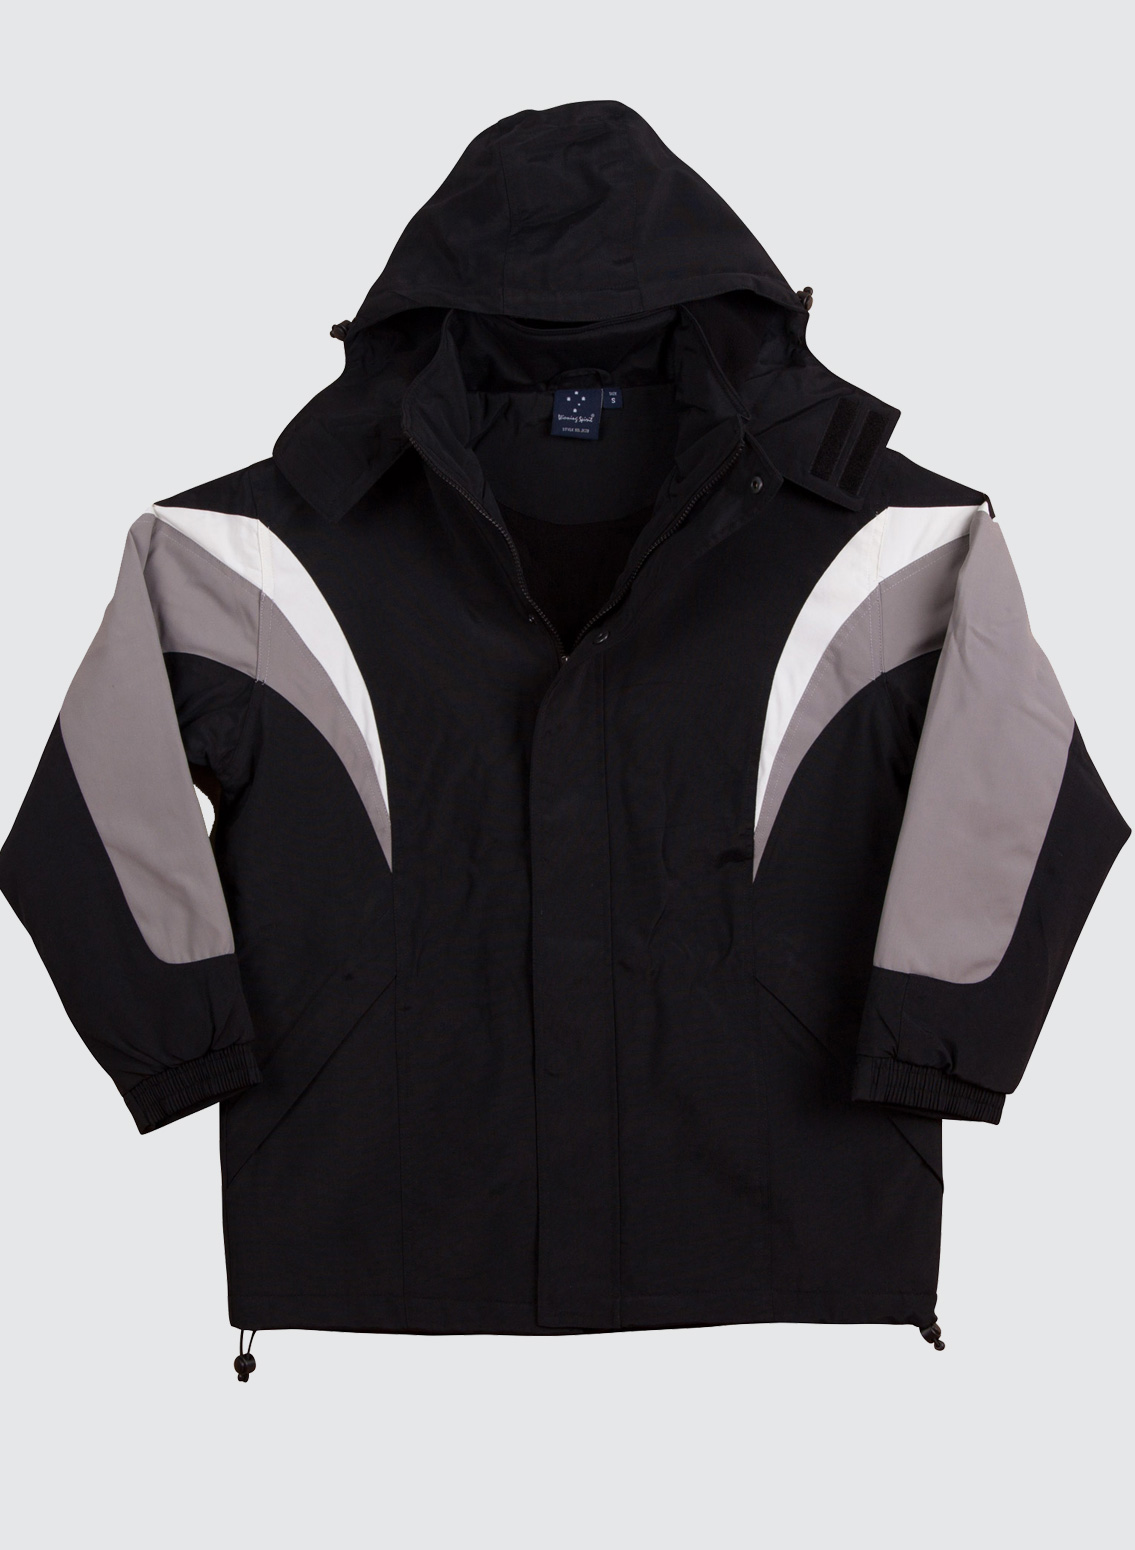 JK28 BATHURST Tri-colour Jacket With Hood Unisex